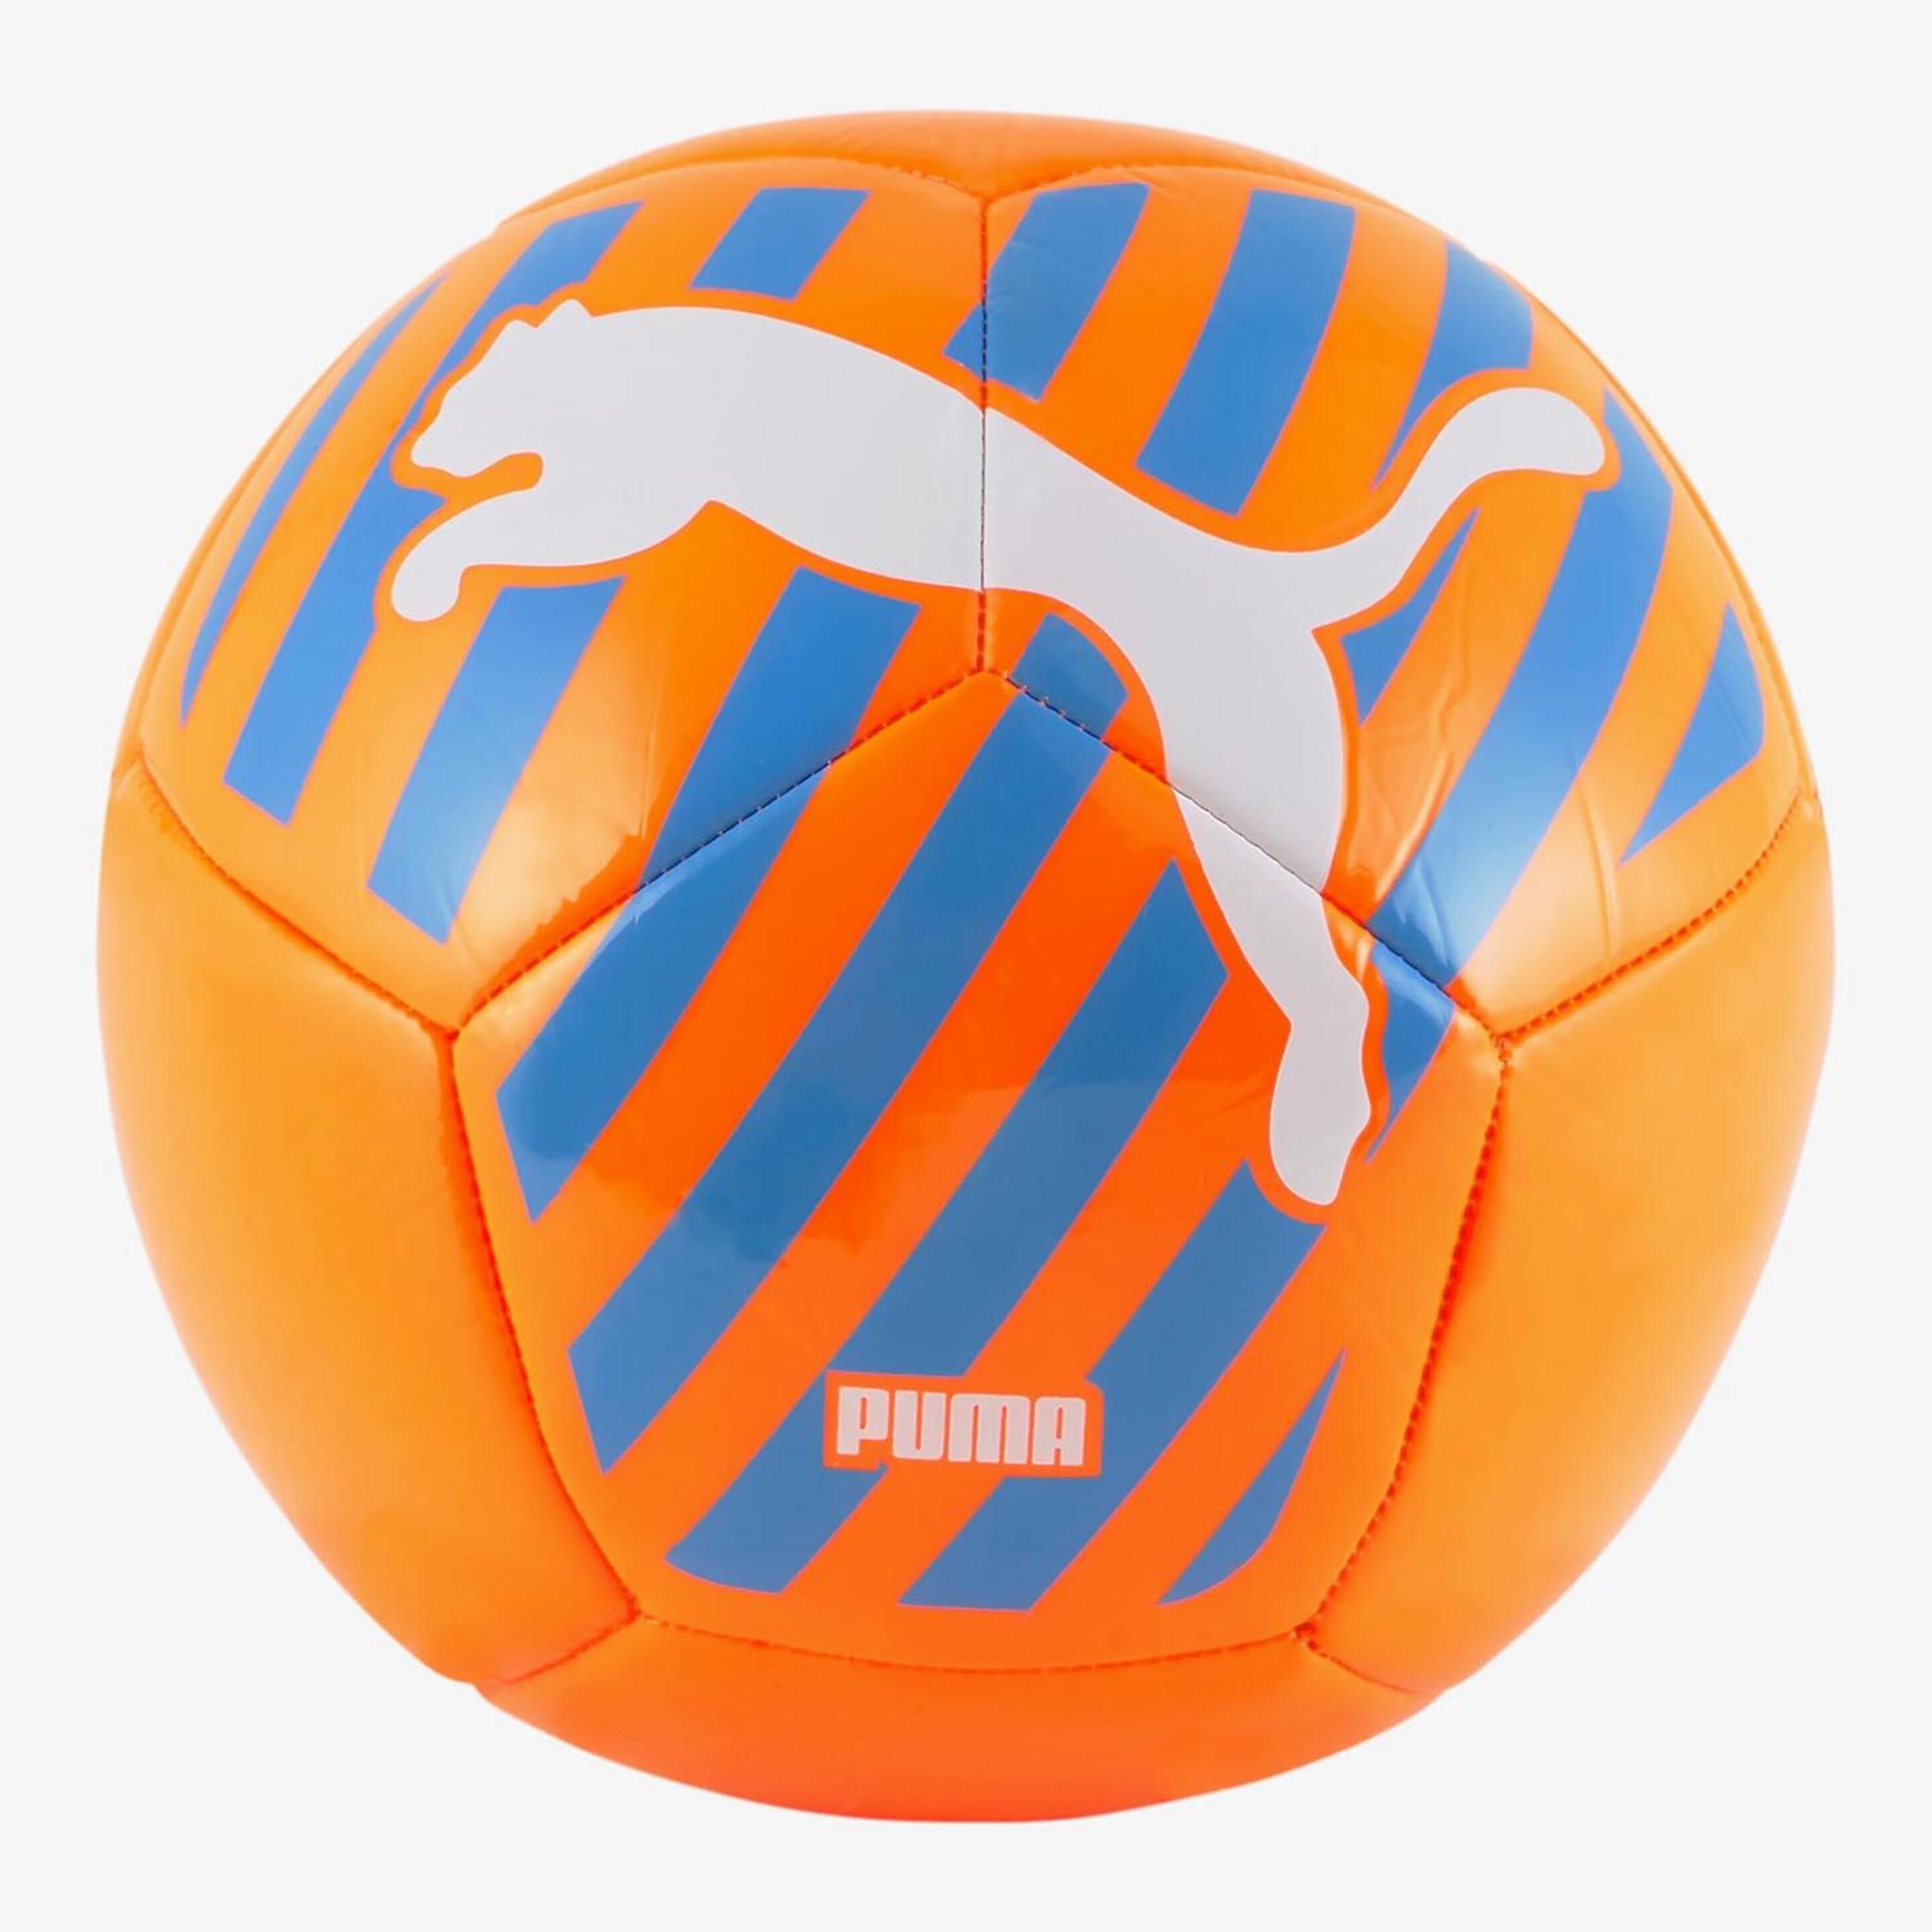 Balón Puma - naranja - Balón Fútbol